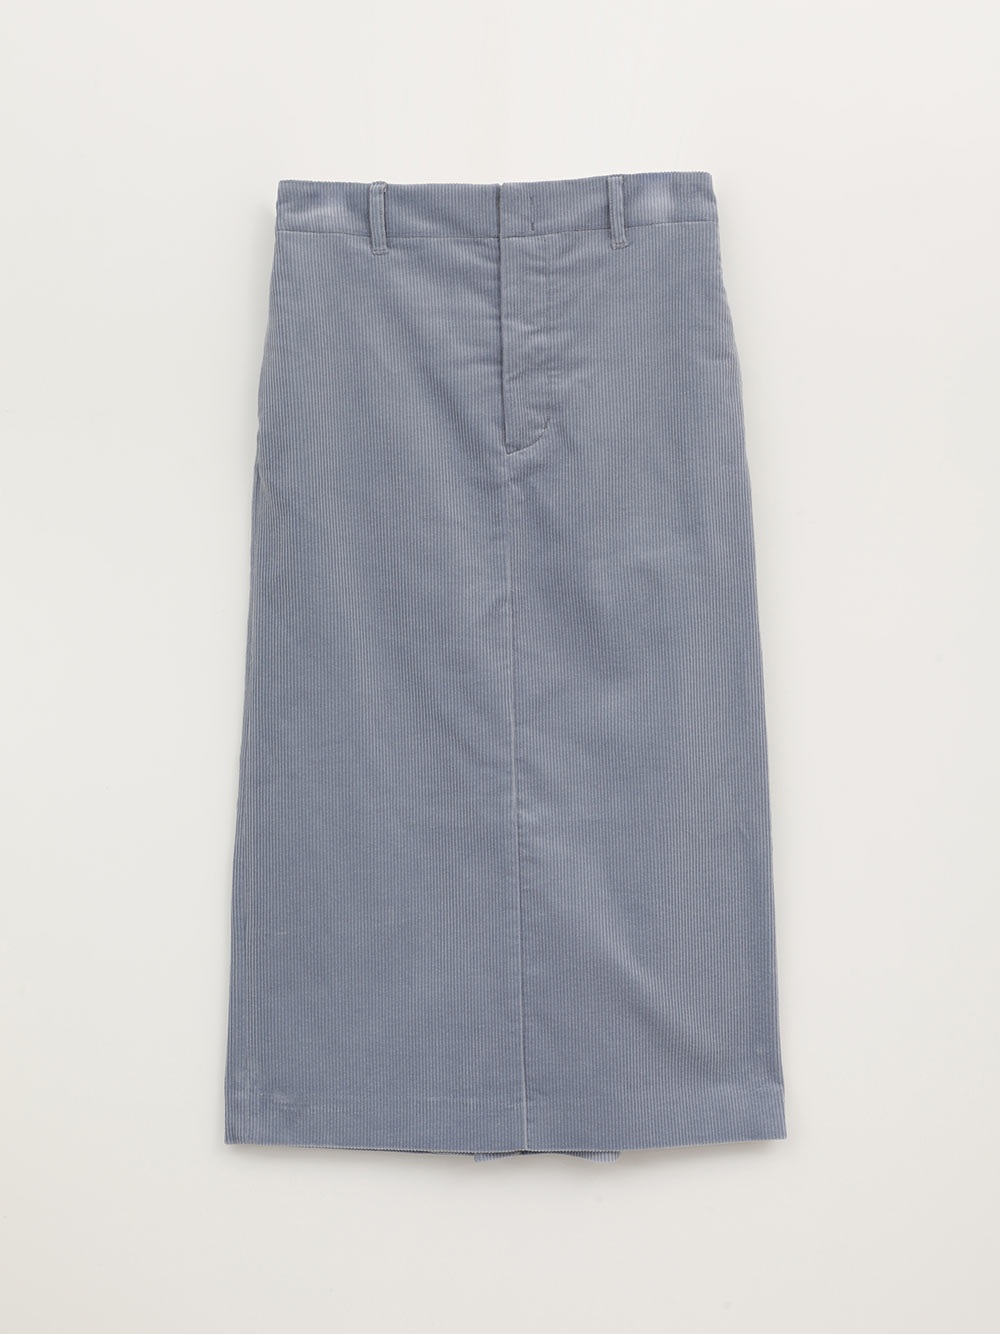 Corduloy Tight Skirt(72サックス-１)